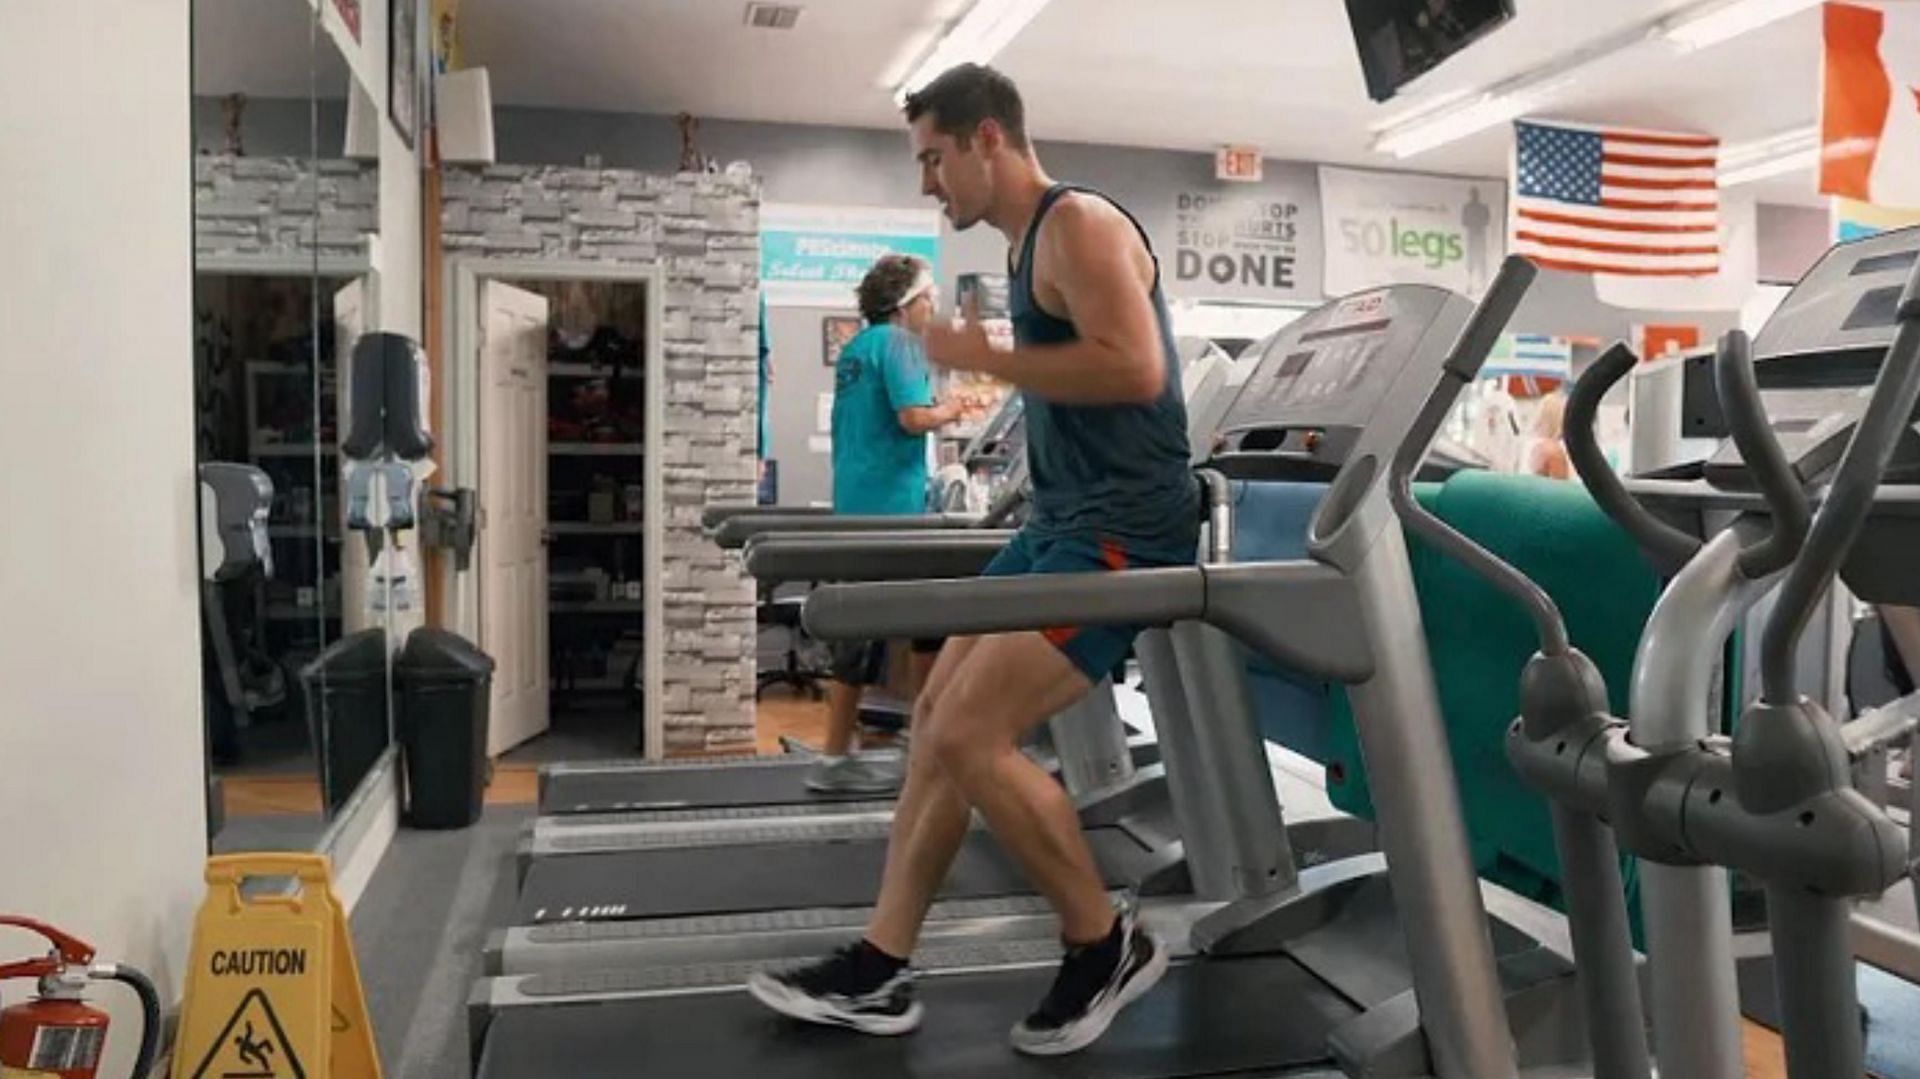 Walking backward on a treadmill (Image via Instagram/@Kneesovertoesguy)